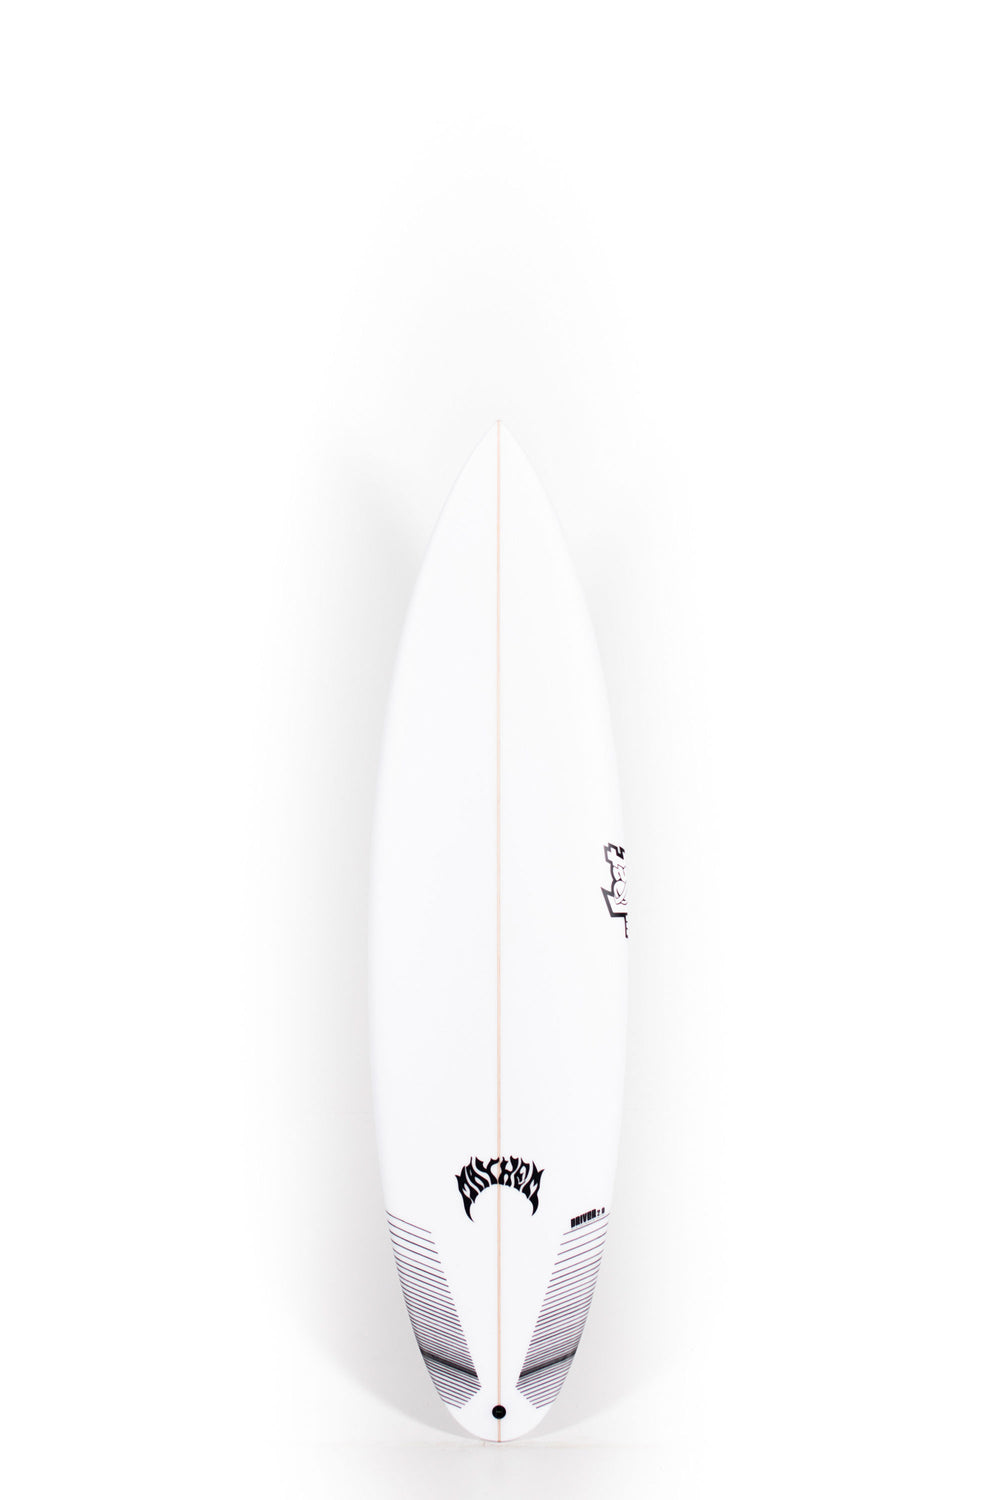 Pukas Surf shop - Lost Surfboards - DRIVER 2.0 by Matt Biolos - 6’5” x 19,88 x 2,63 - 34,95L - MH12520